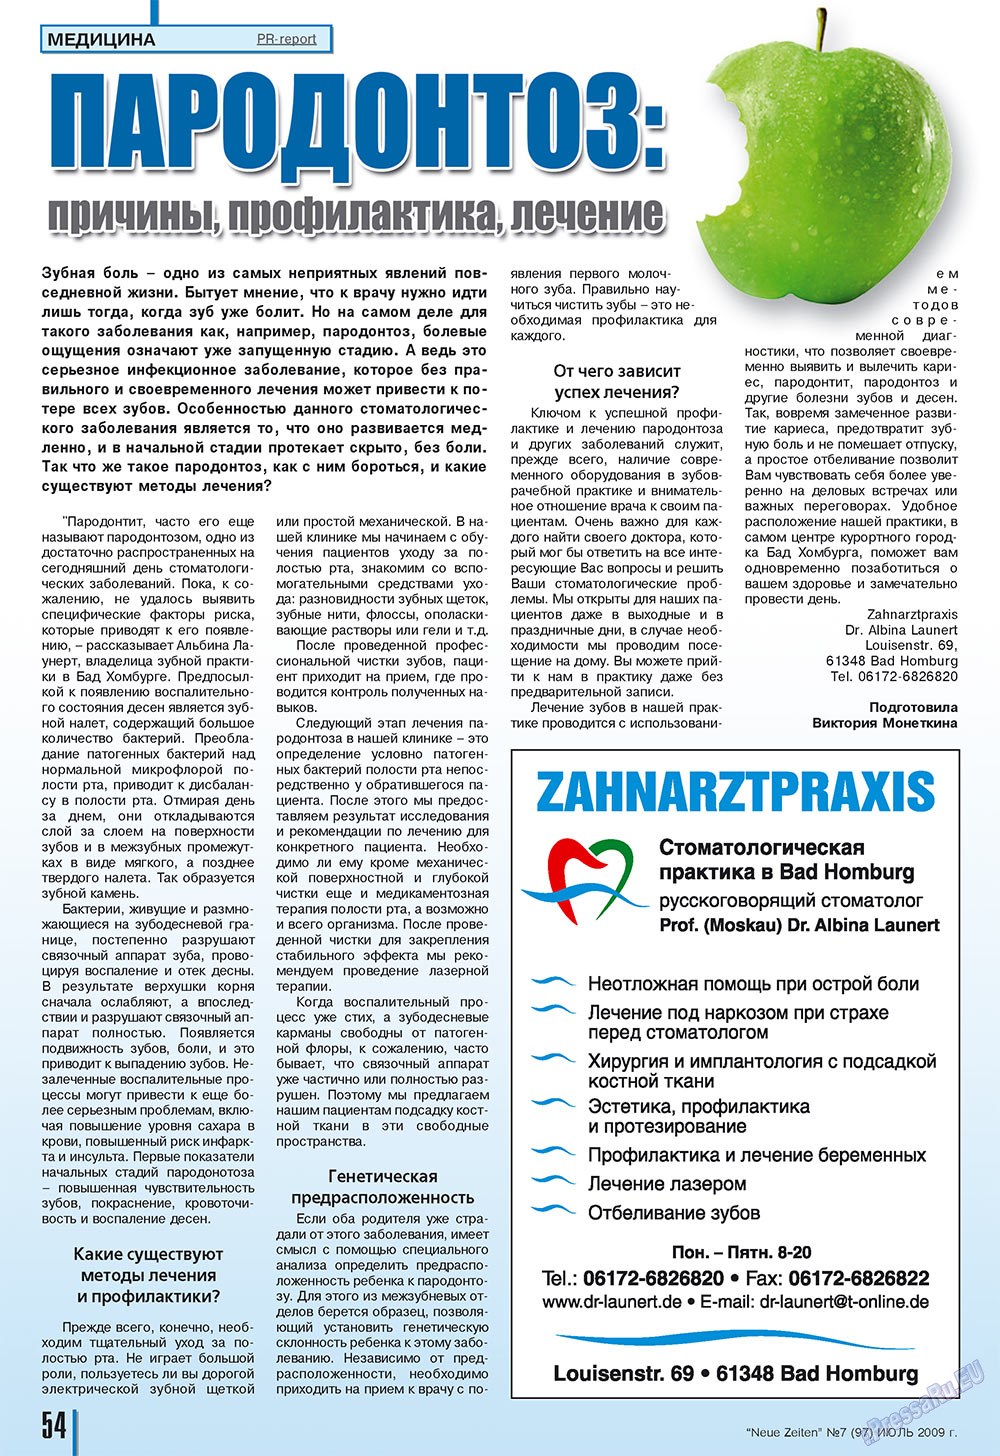 Neue Zeiten (журнал). 2009 год, номер 7, стр. 54